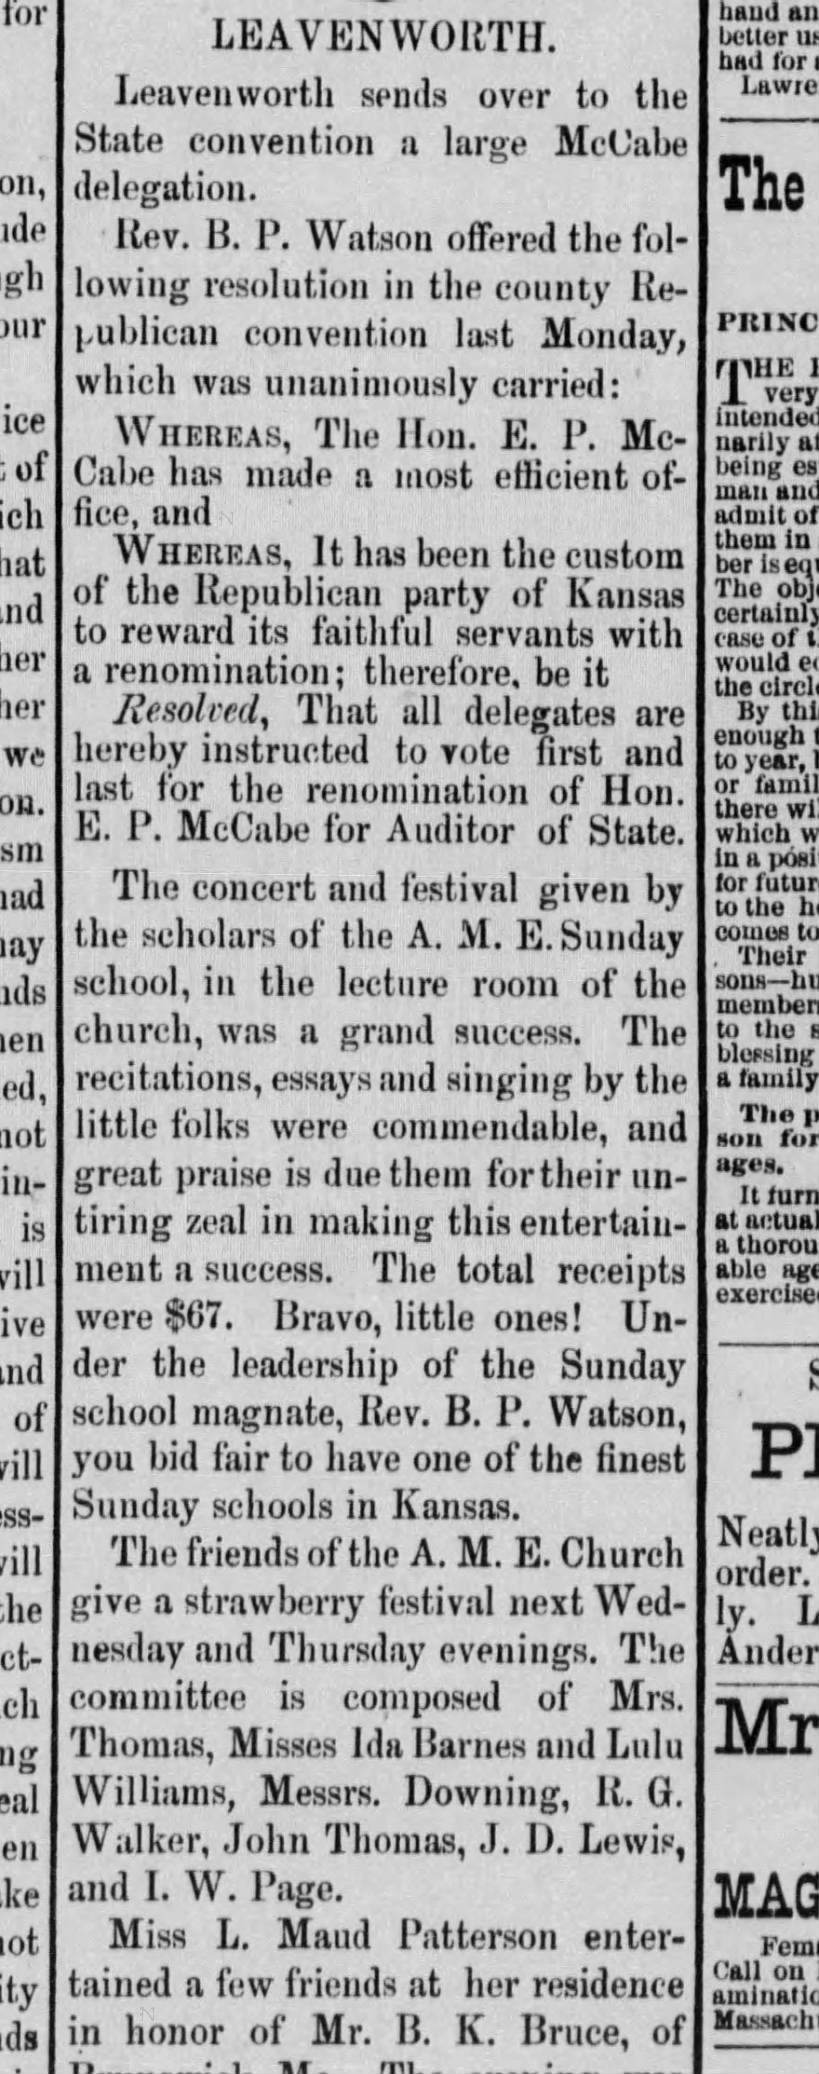 Ida Barnes and (Richard J.) Downing mentioned in Leavenworth, KS. newspaper in 1884